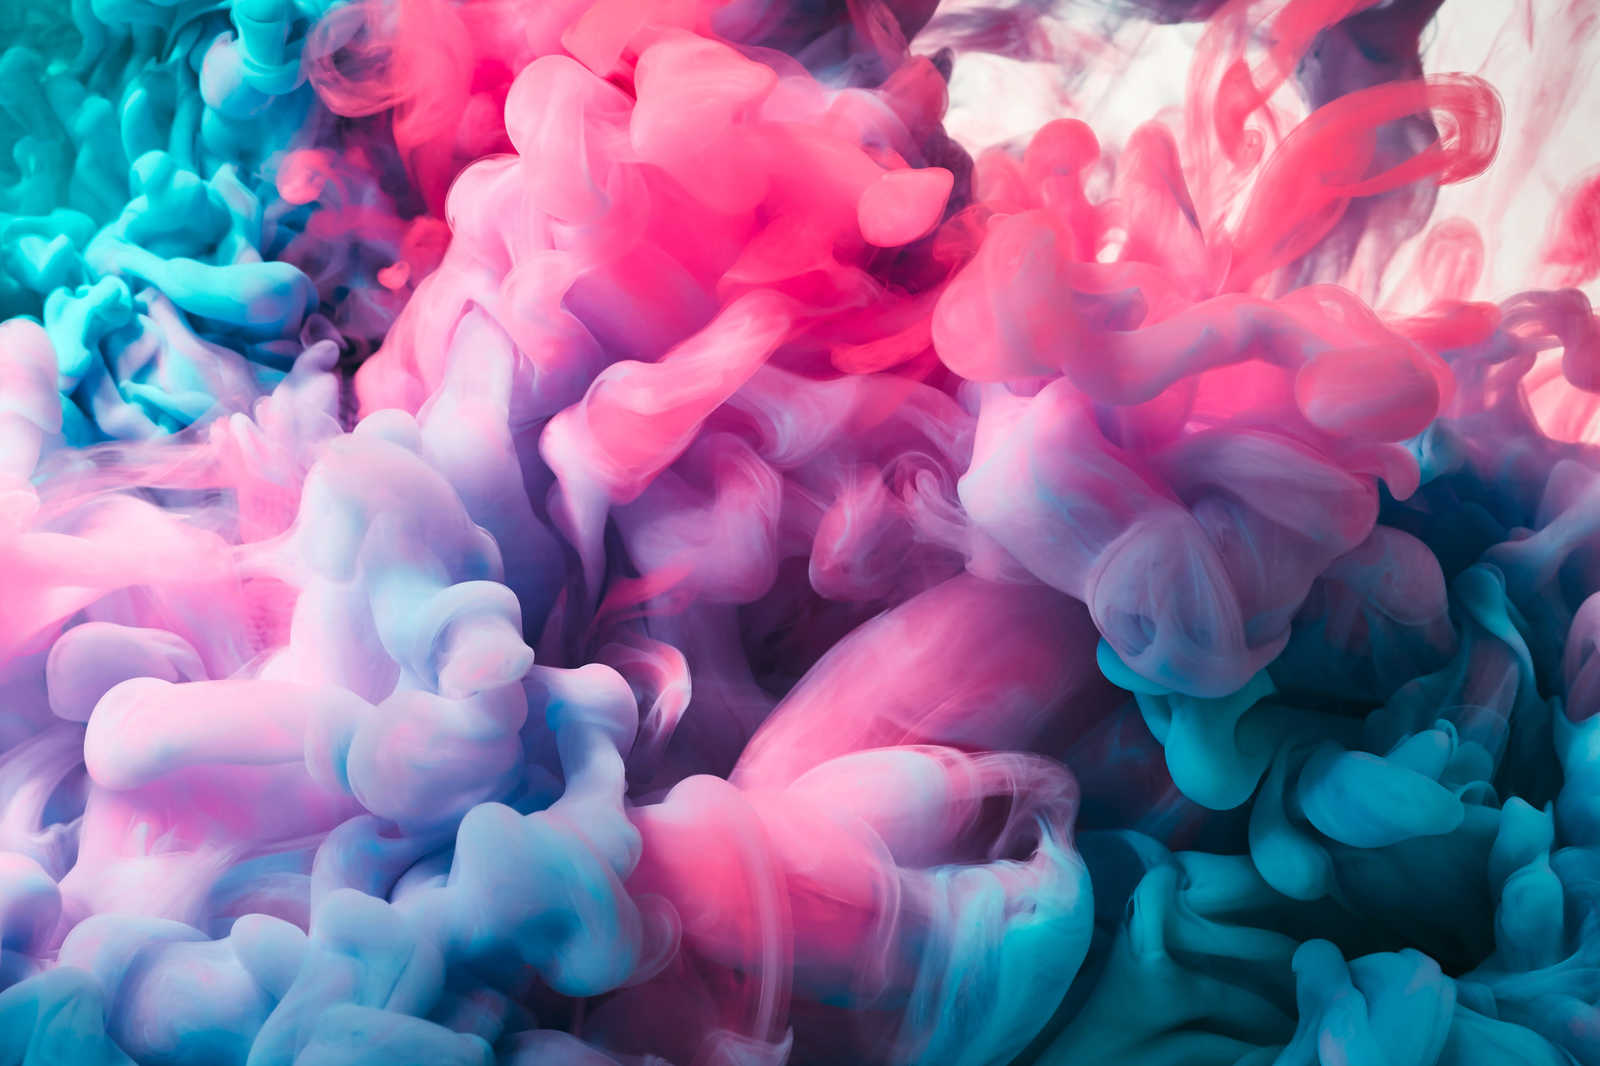             Coloured Smoke Canvas |Pink, Blue, White - 0.90 m x 0.60 m
        